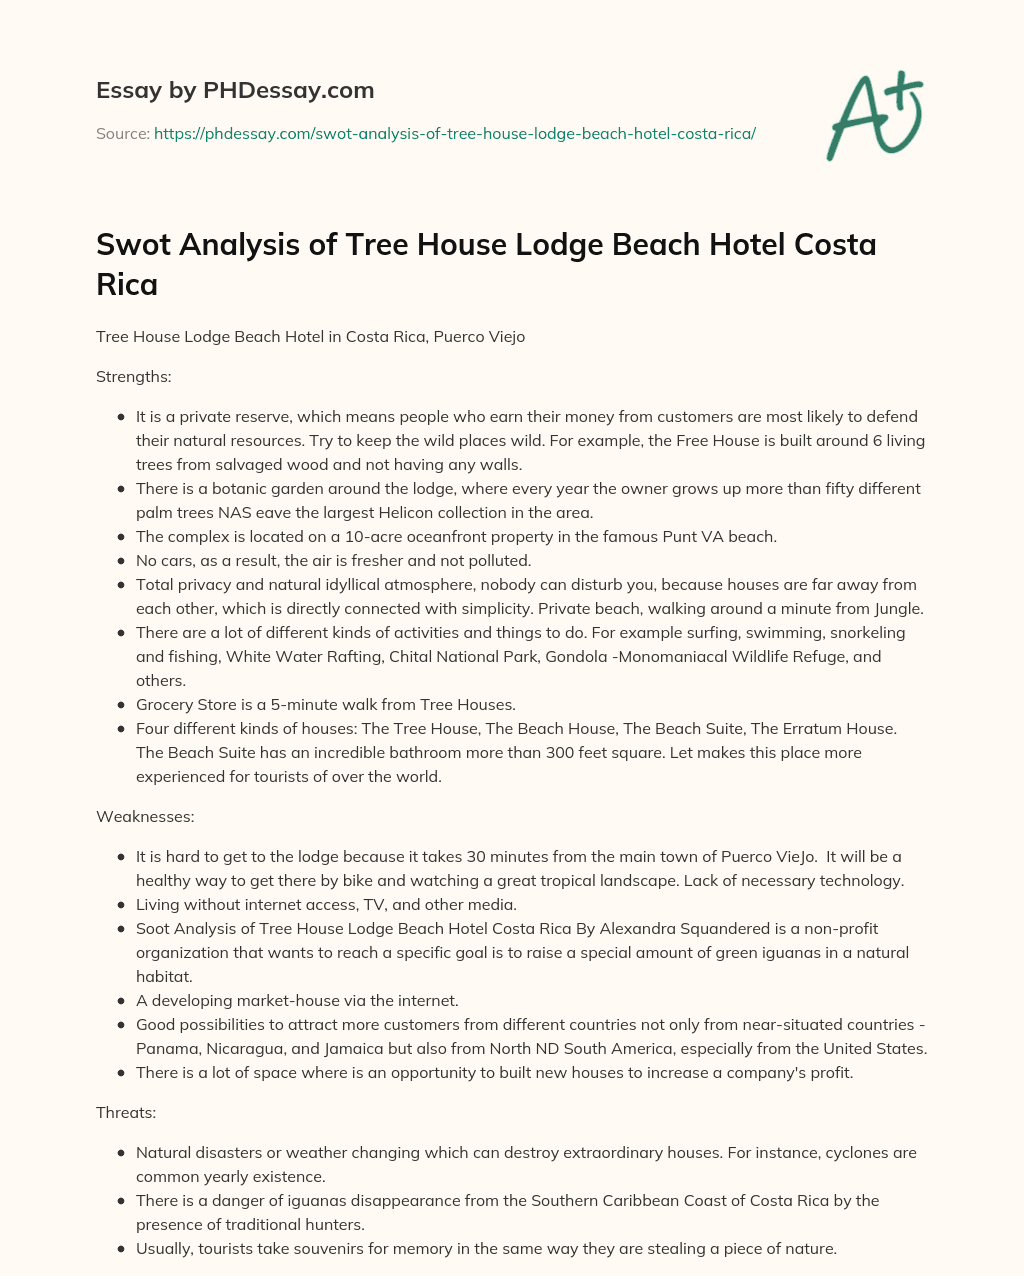 Swot Analysis of Tree House Lodge Beach Hotel Costa Rica essay